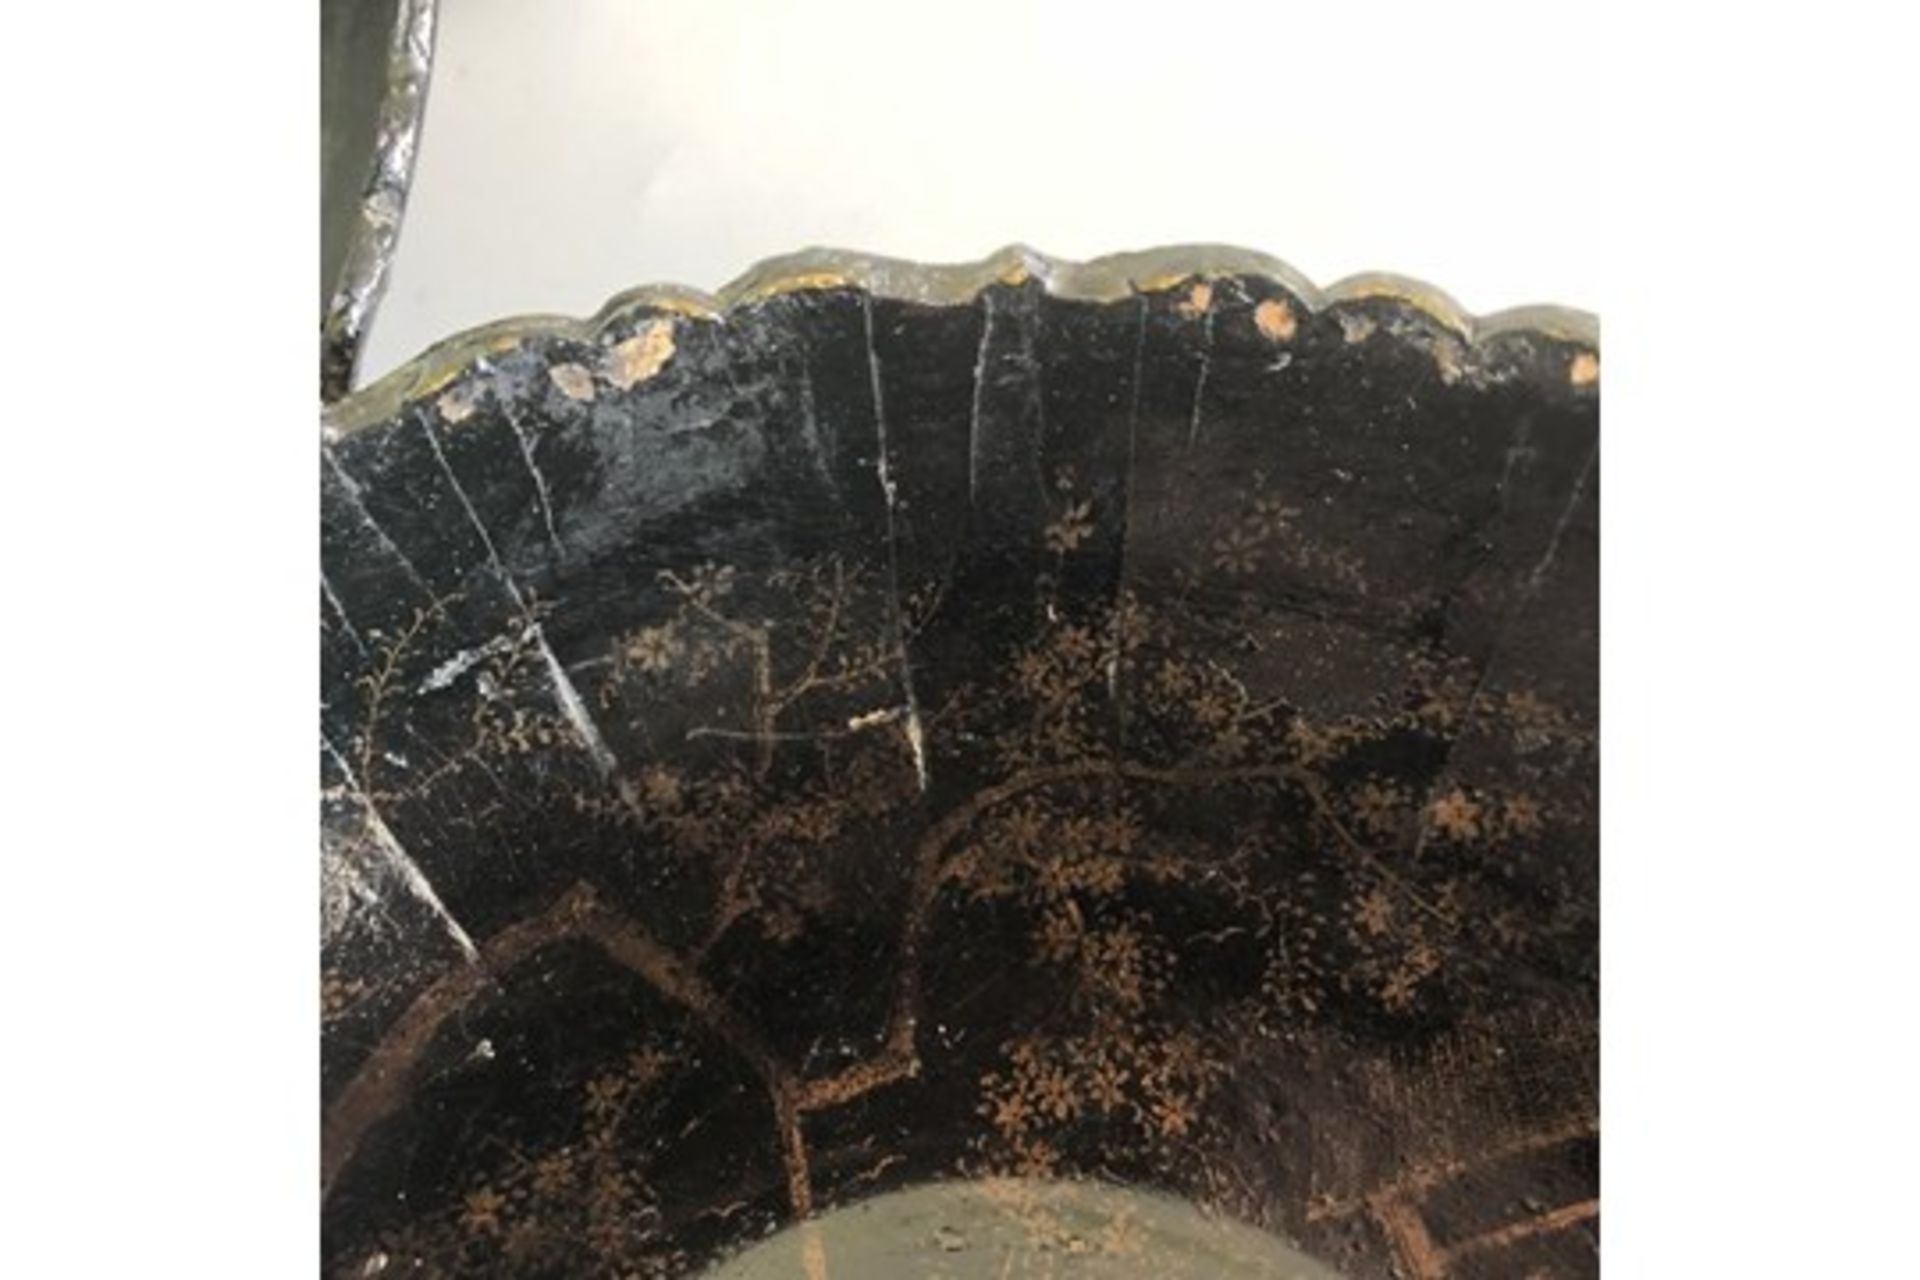 Group or Set of 3 antique black & gilt Japanese lacquered papier mache bowls. - Image 6 of 8